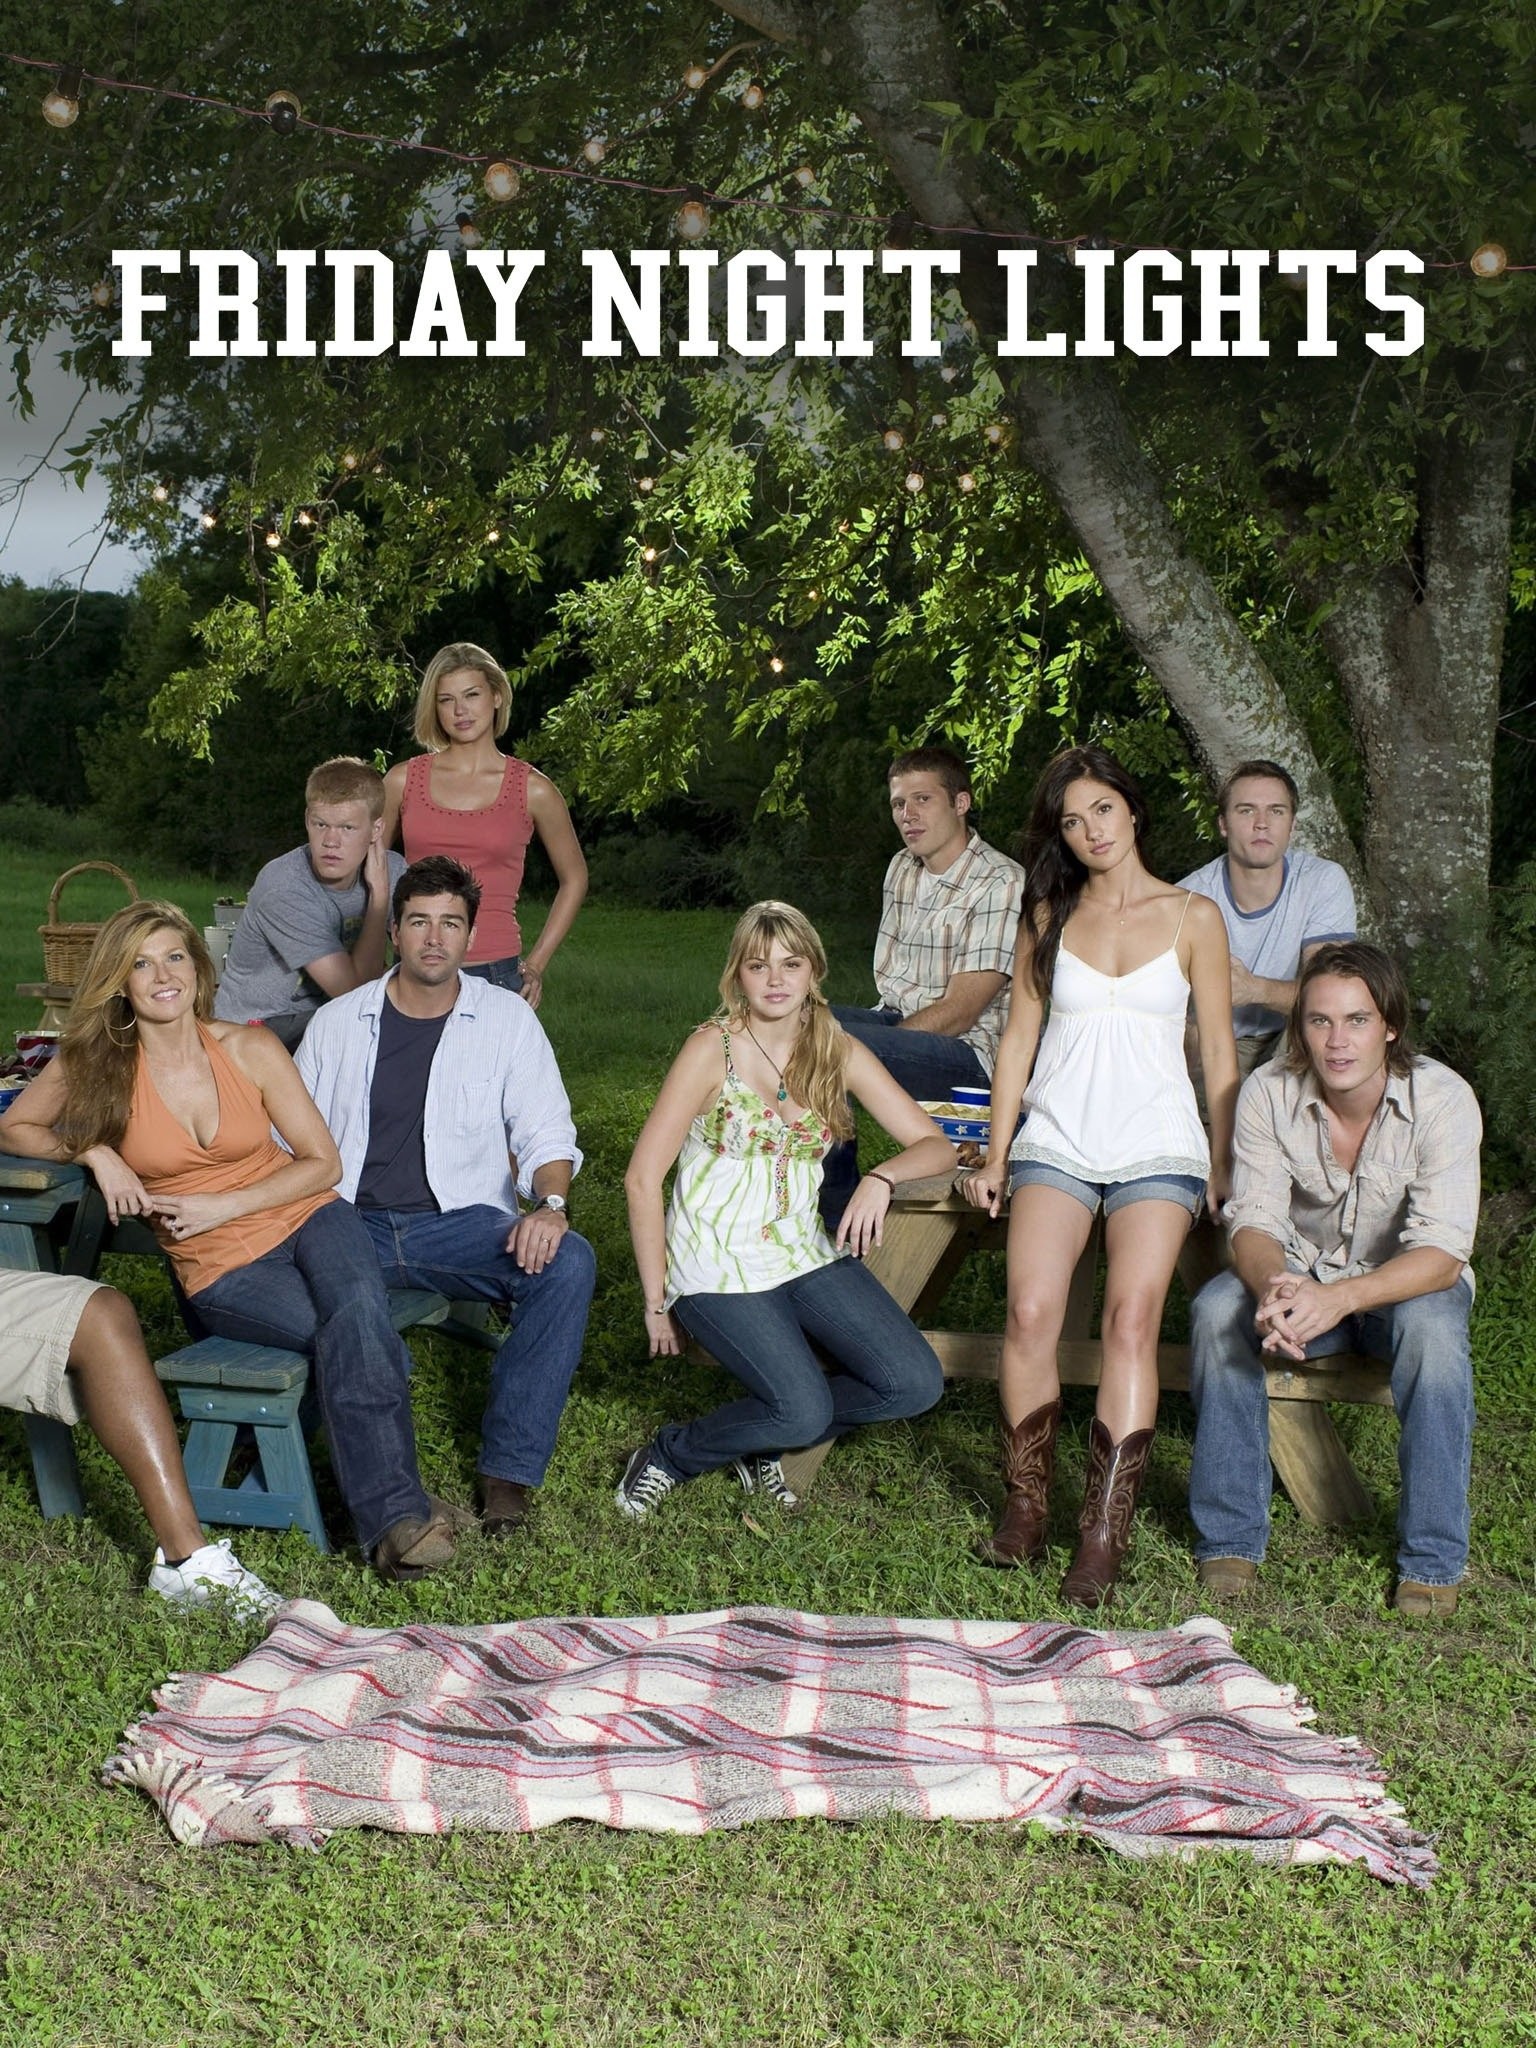 Friday Night Lights (season 3) - Wikipedia